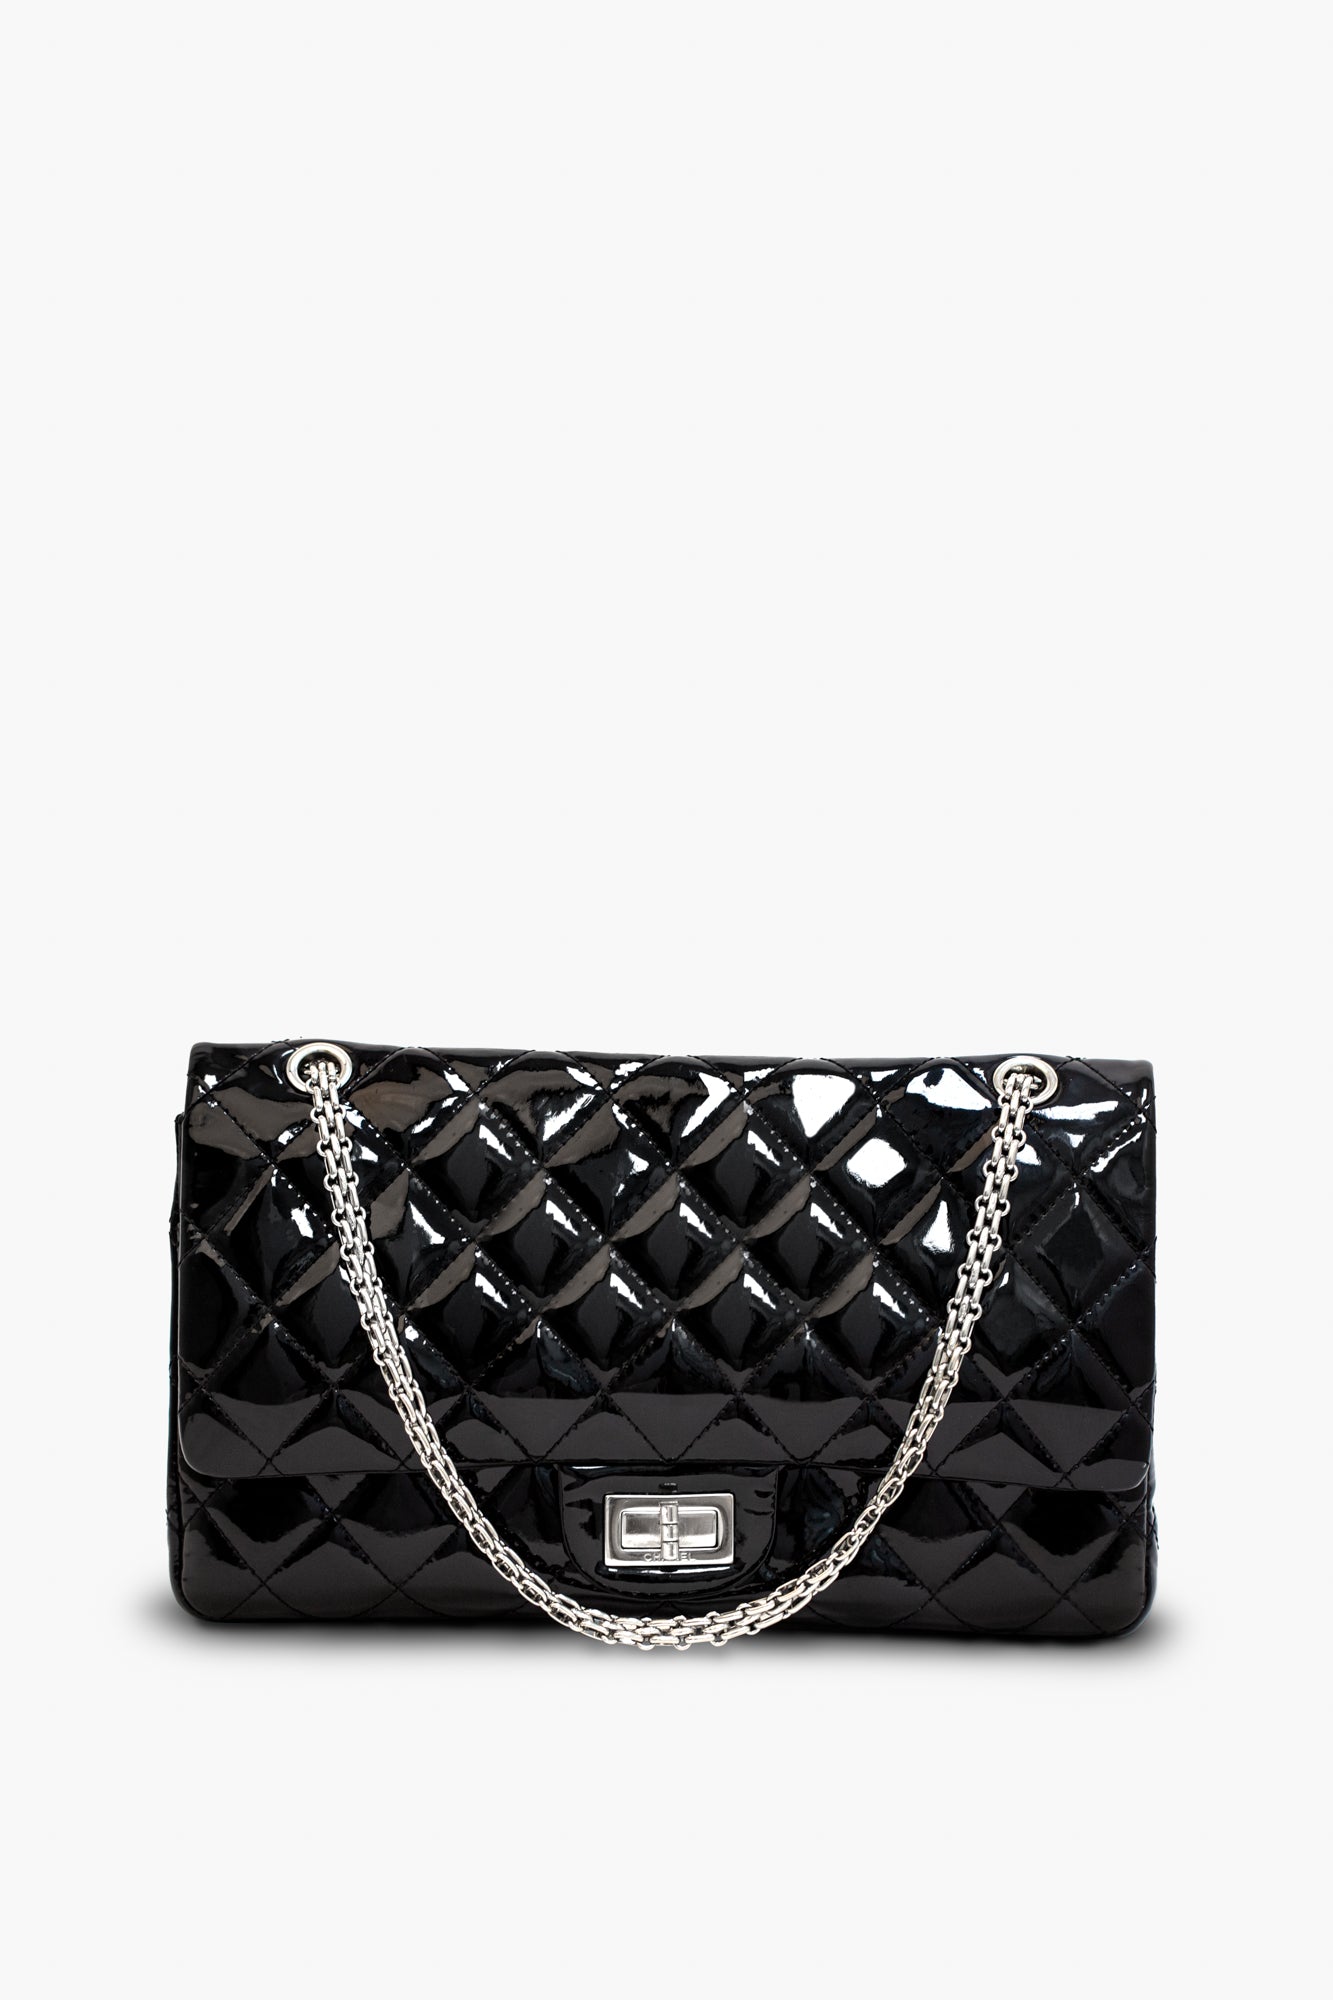 Chanel Black 2.55 Reissue Patent Leather Maxi Double Flap Bag